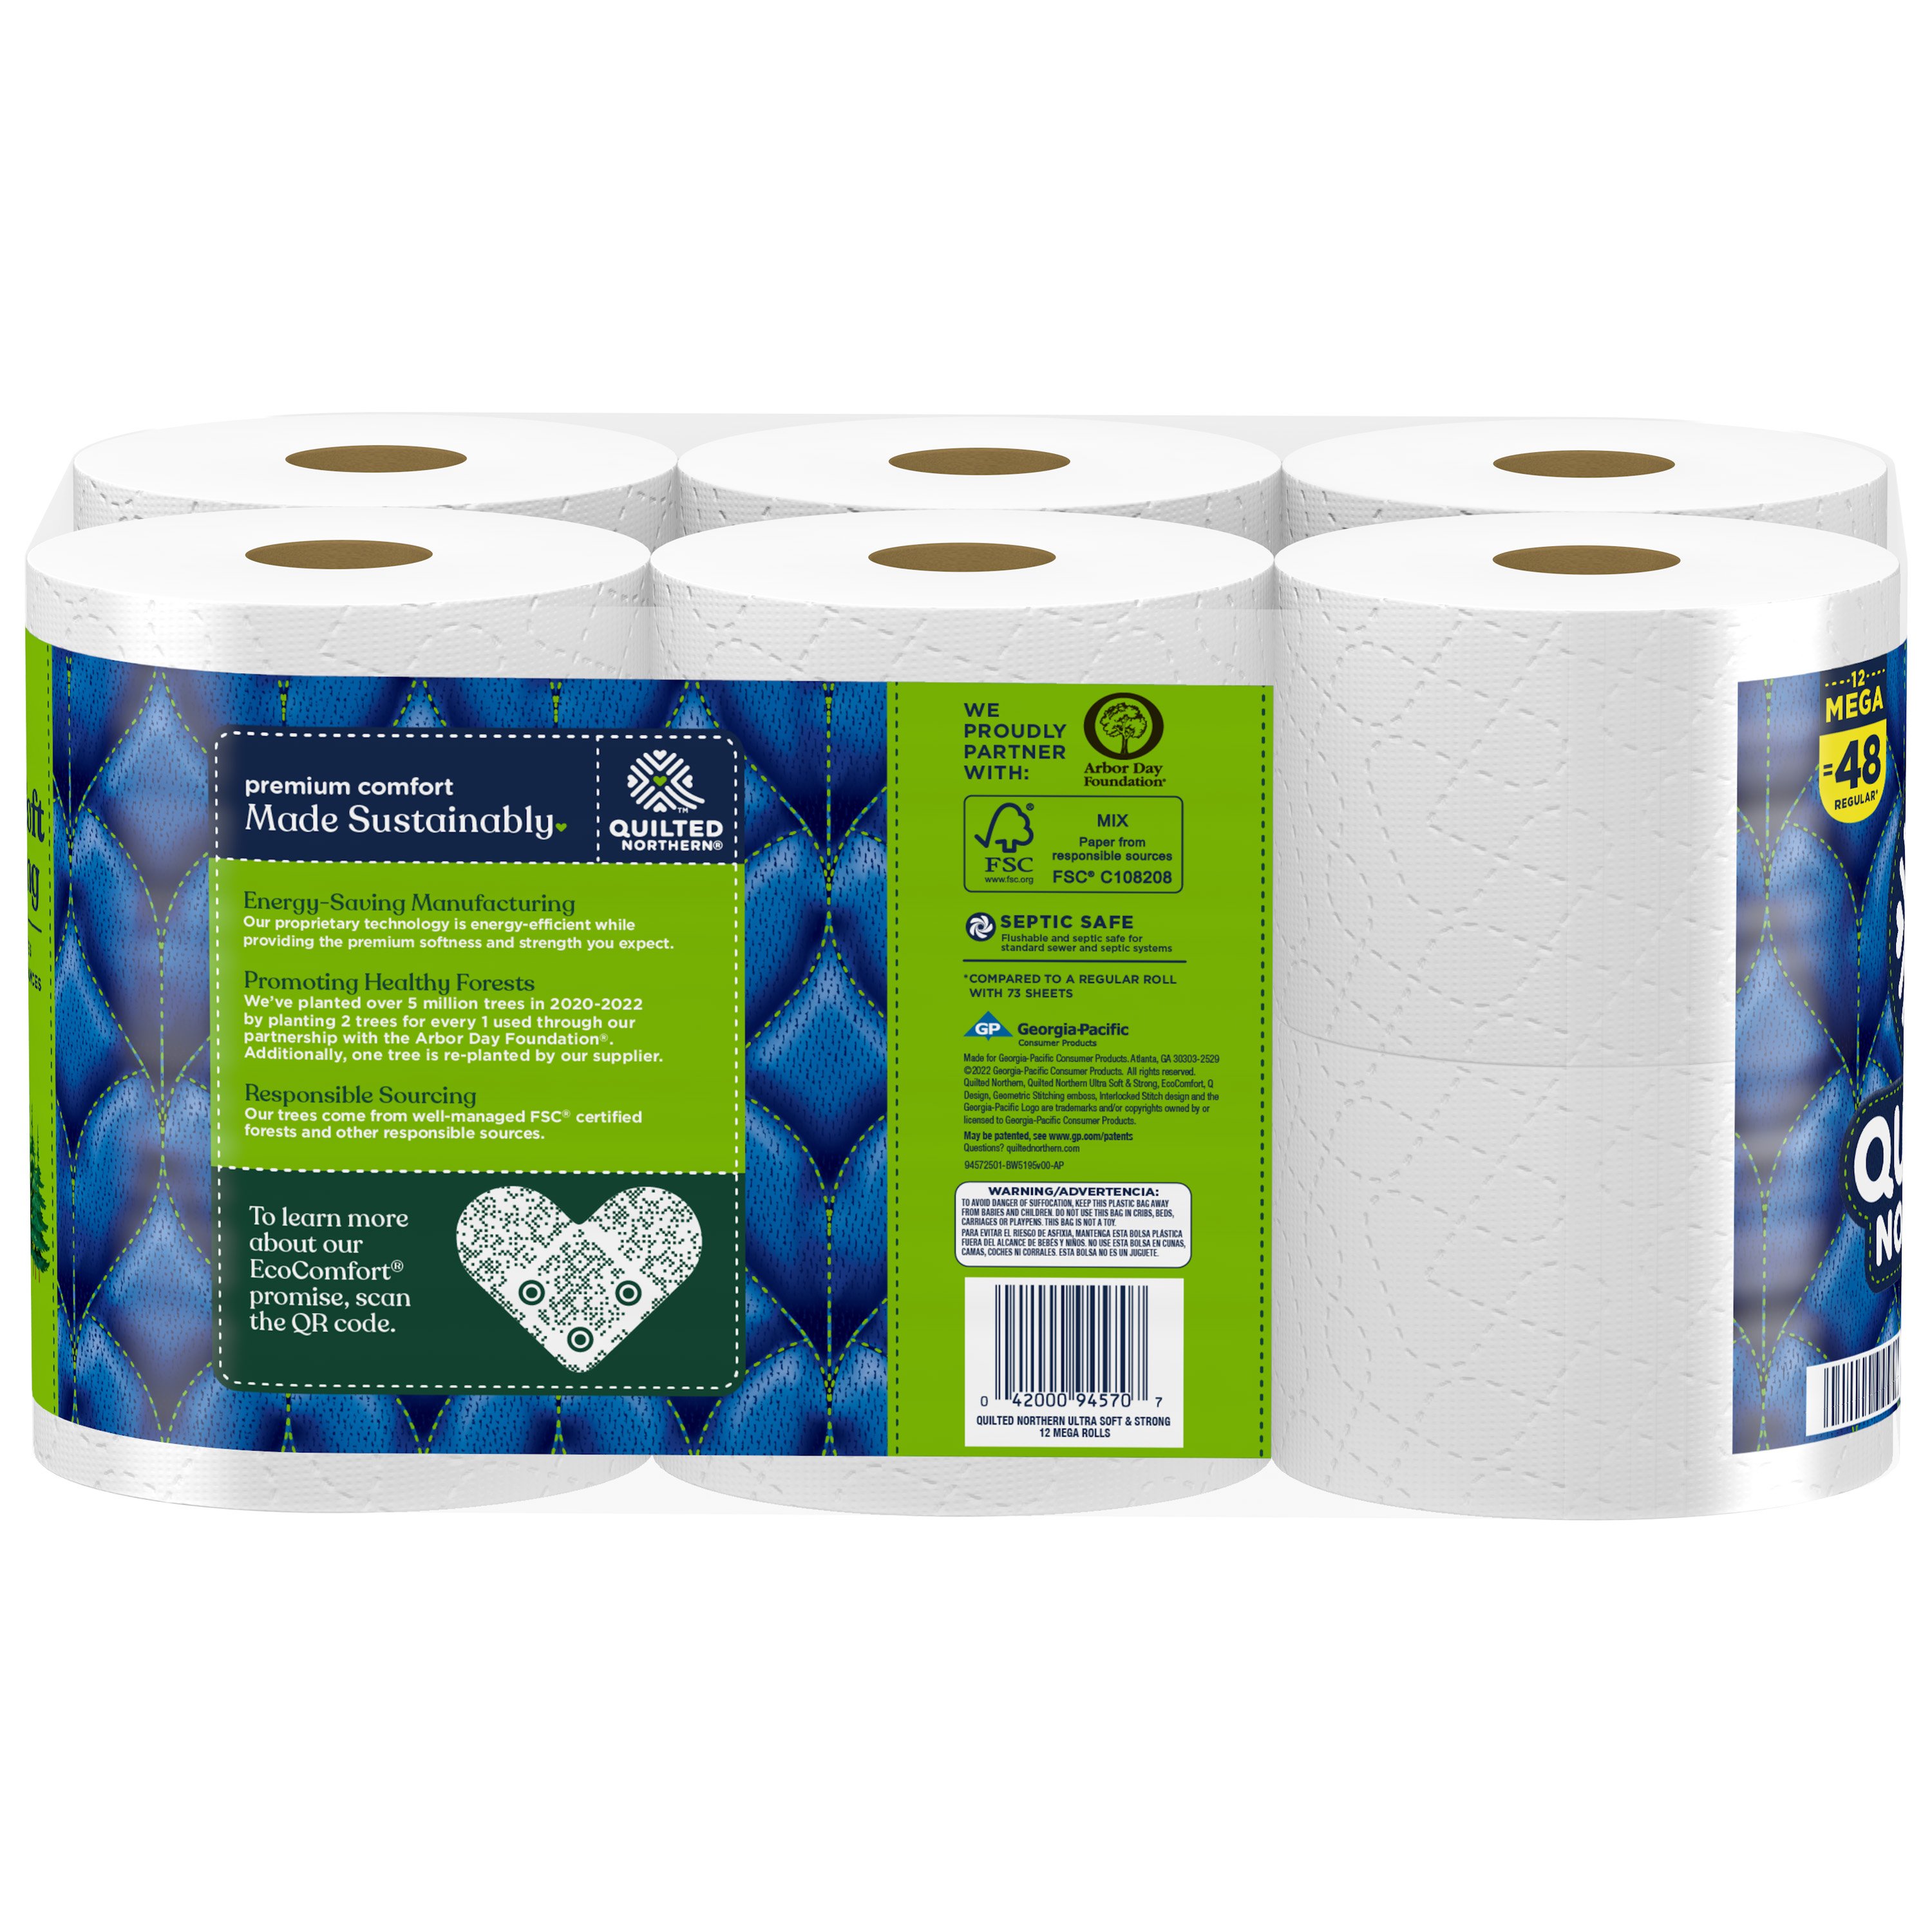 Quilted Northern Ultra Plush Mega Roll Toilet Paper, 18 rolls - Kroger